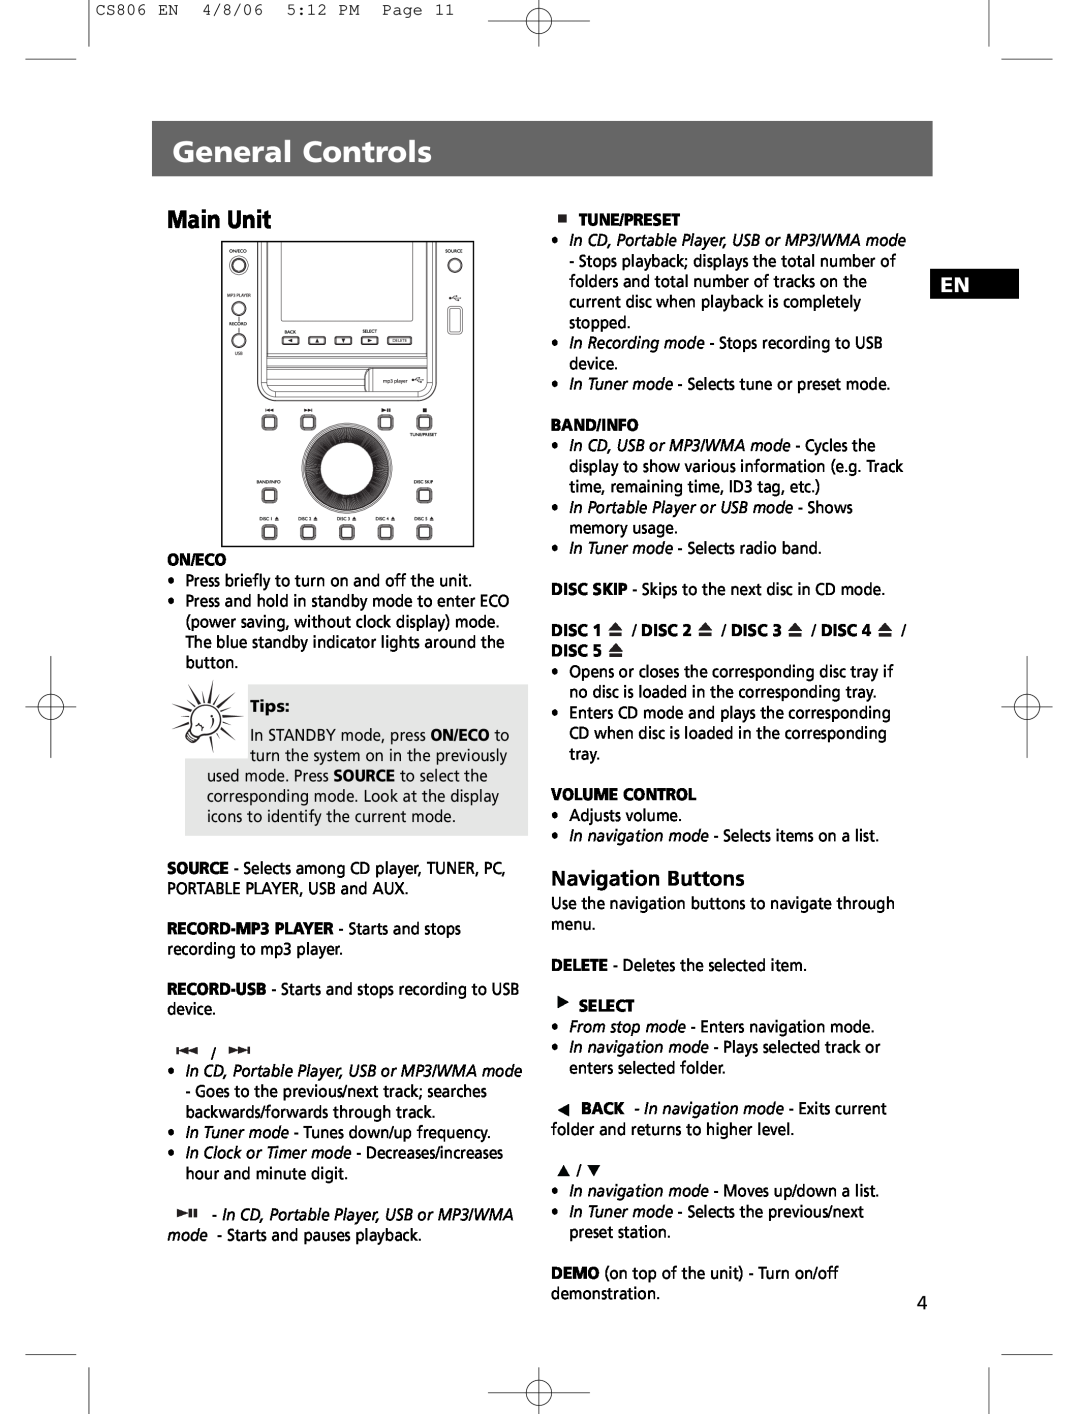 Technicolor - Thomson CS806 user manual General Controls, Main Unit 